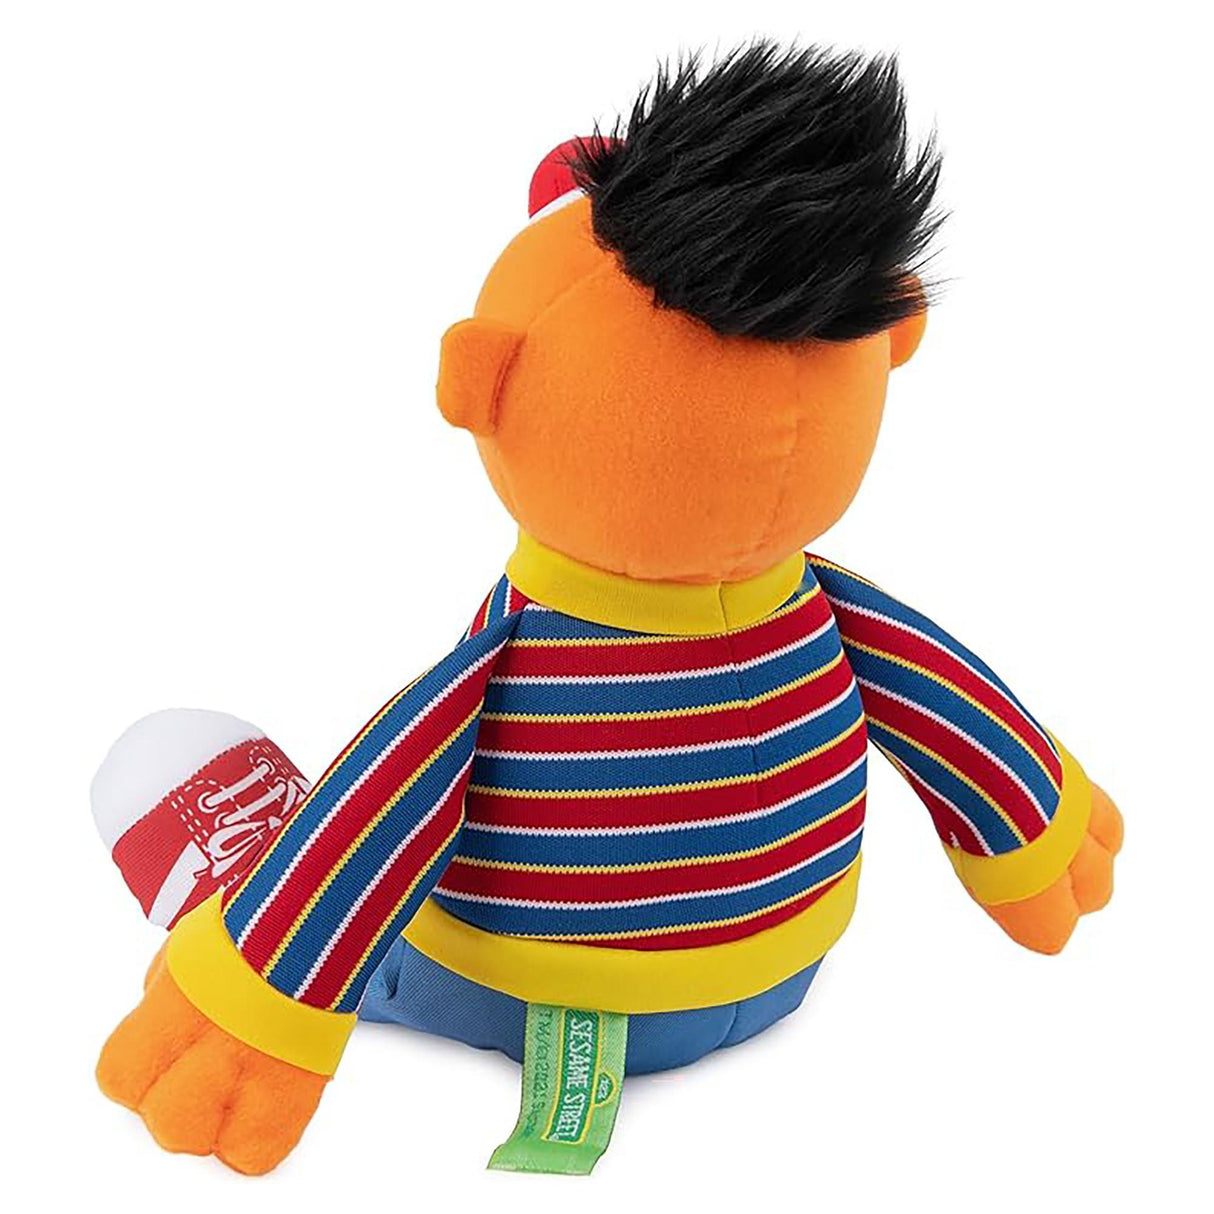 Sesame Street Ernie Plush Toy (24 cms)